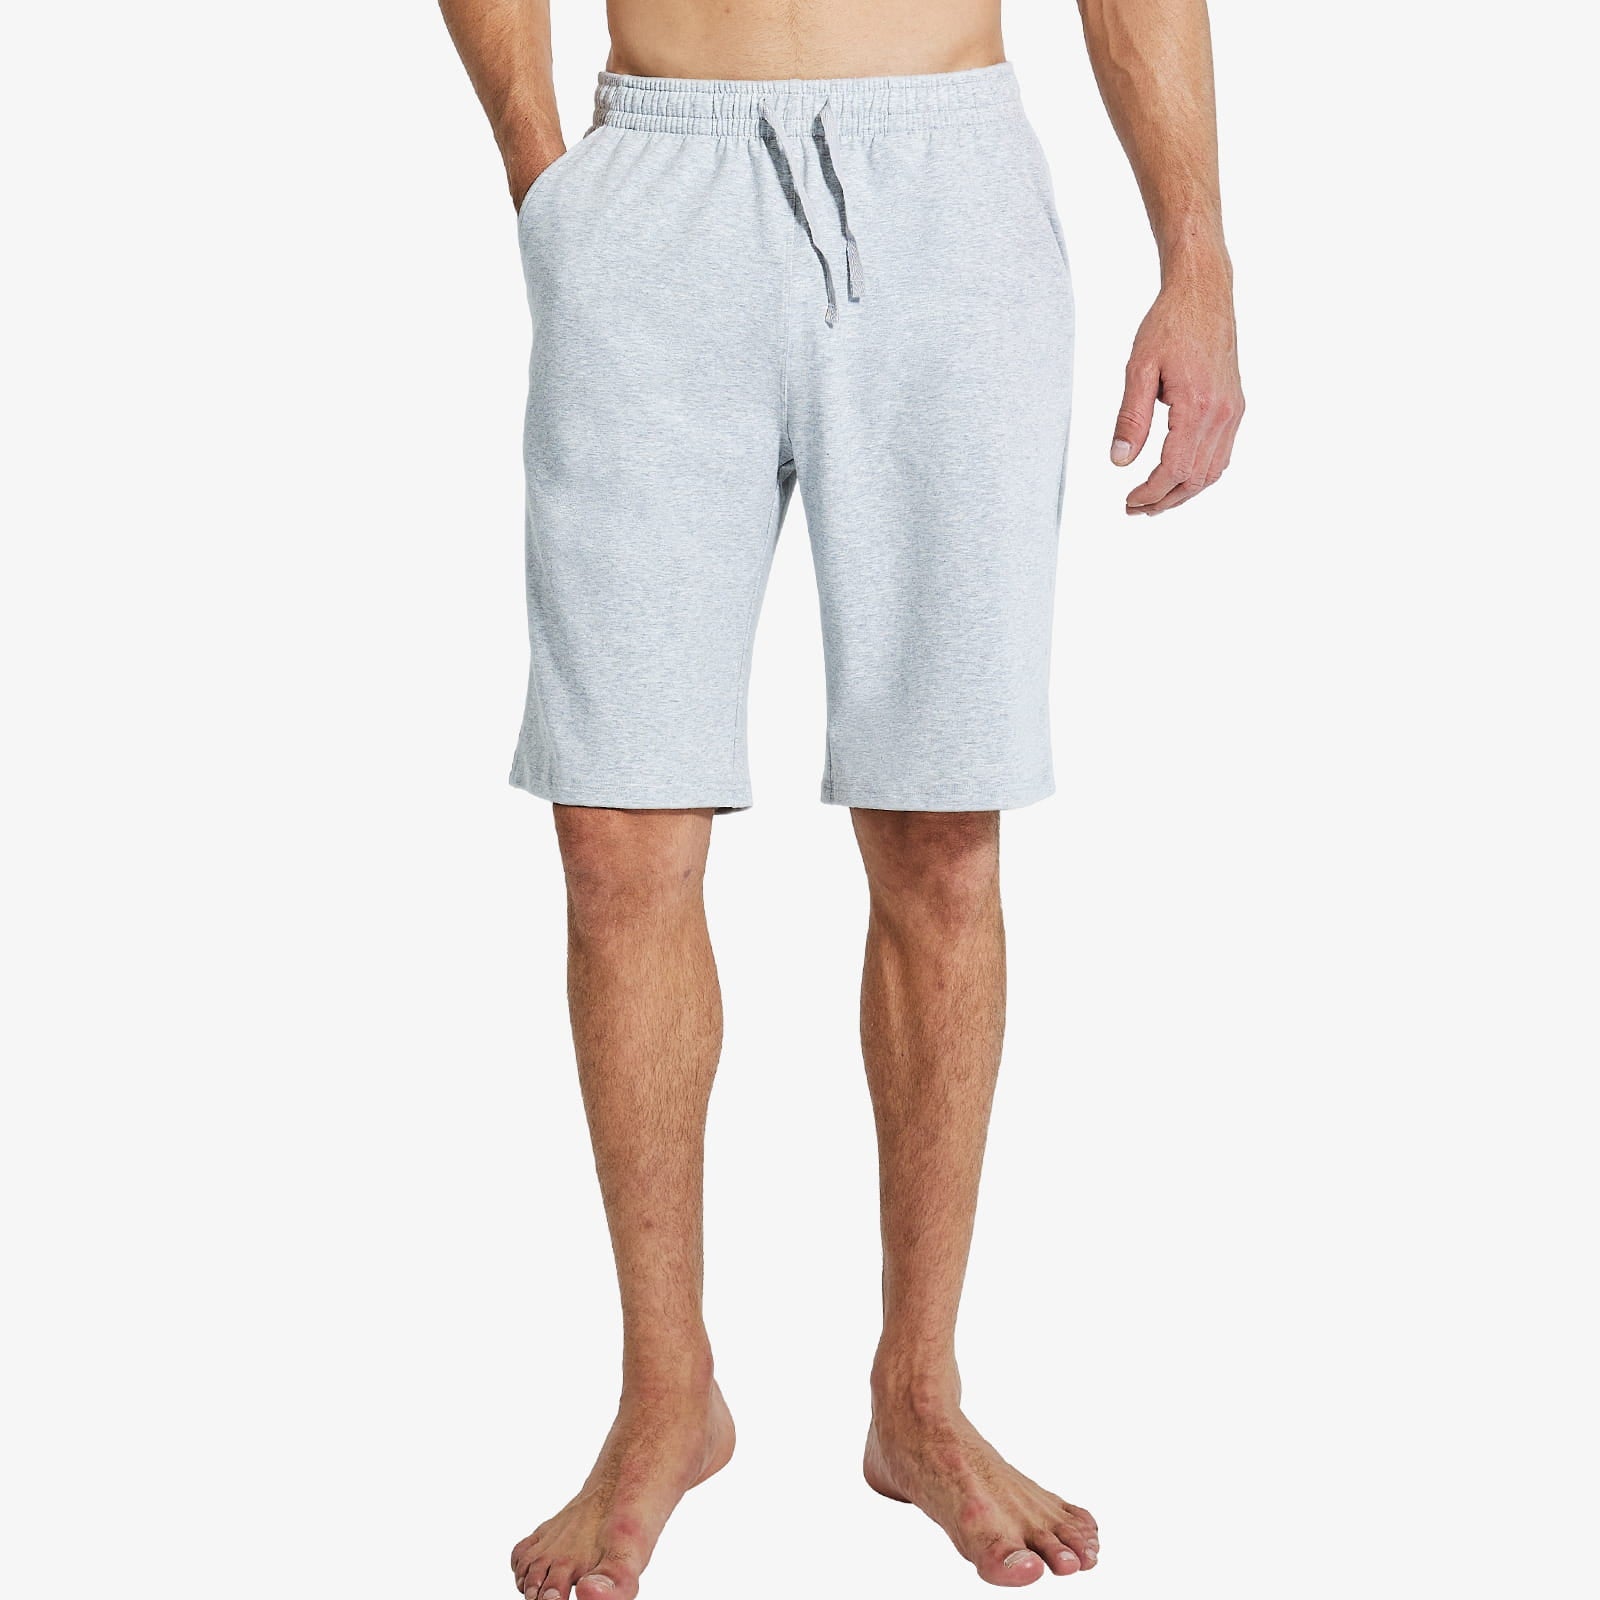 Men's Workout Cotton Shorts 11'' Long Gym Athletic Knit Shorts Men's Shorts Light Grey / S MIER